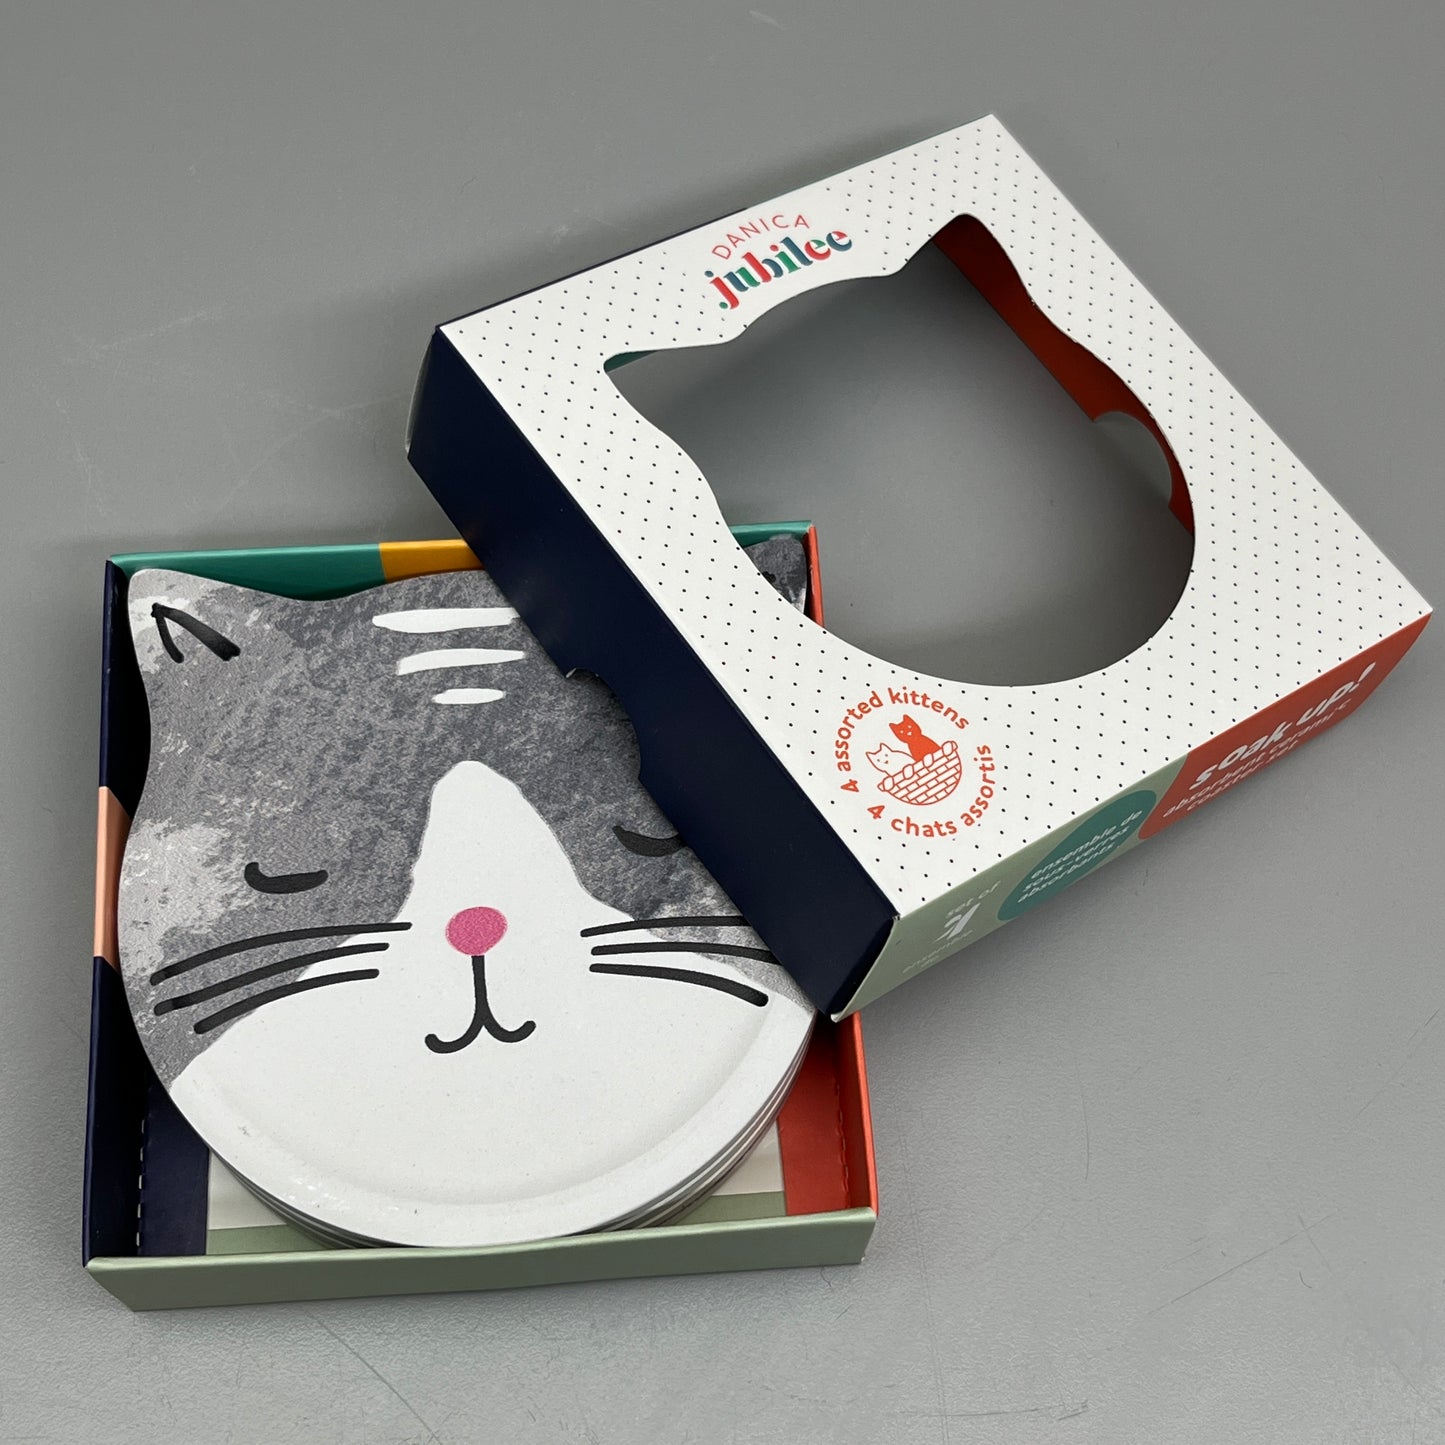 DANICA JUBILEE Set of 4! Cats Meow Soak Up Coasters W4" x L5" 4 Styles 1041001 (New)